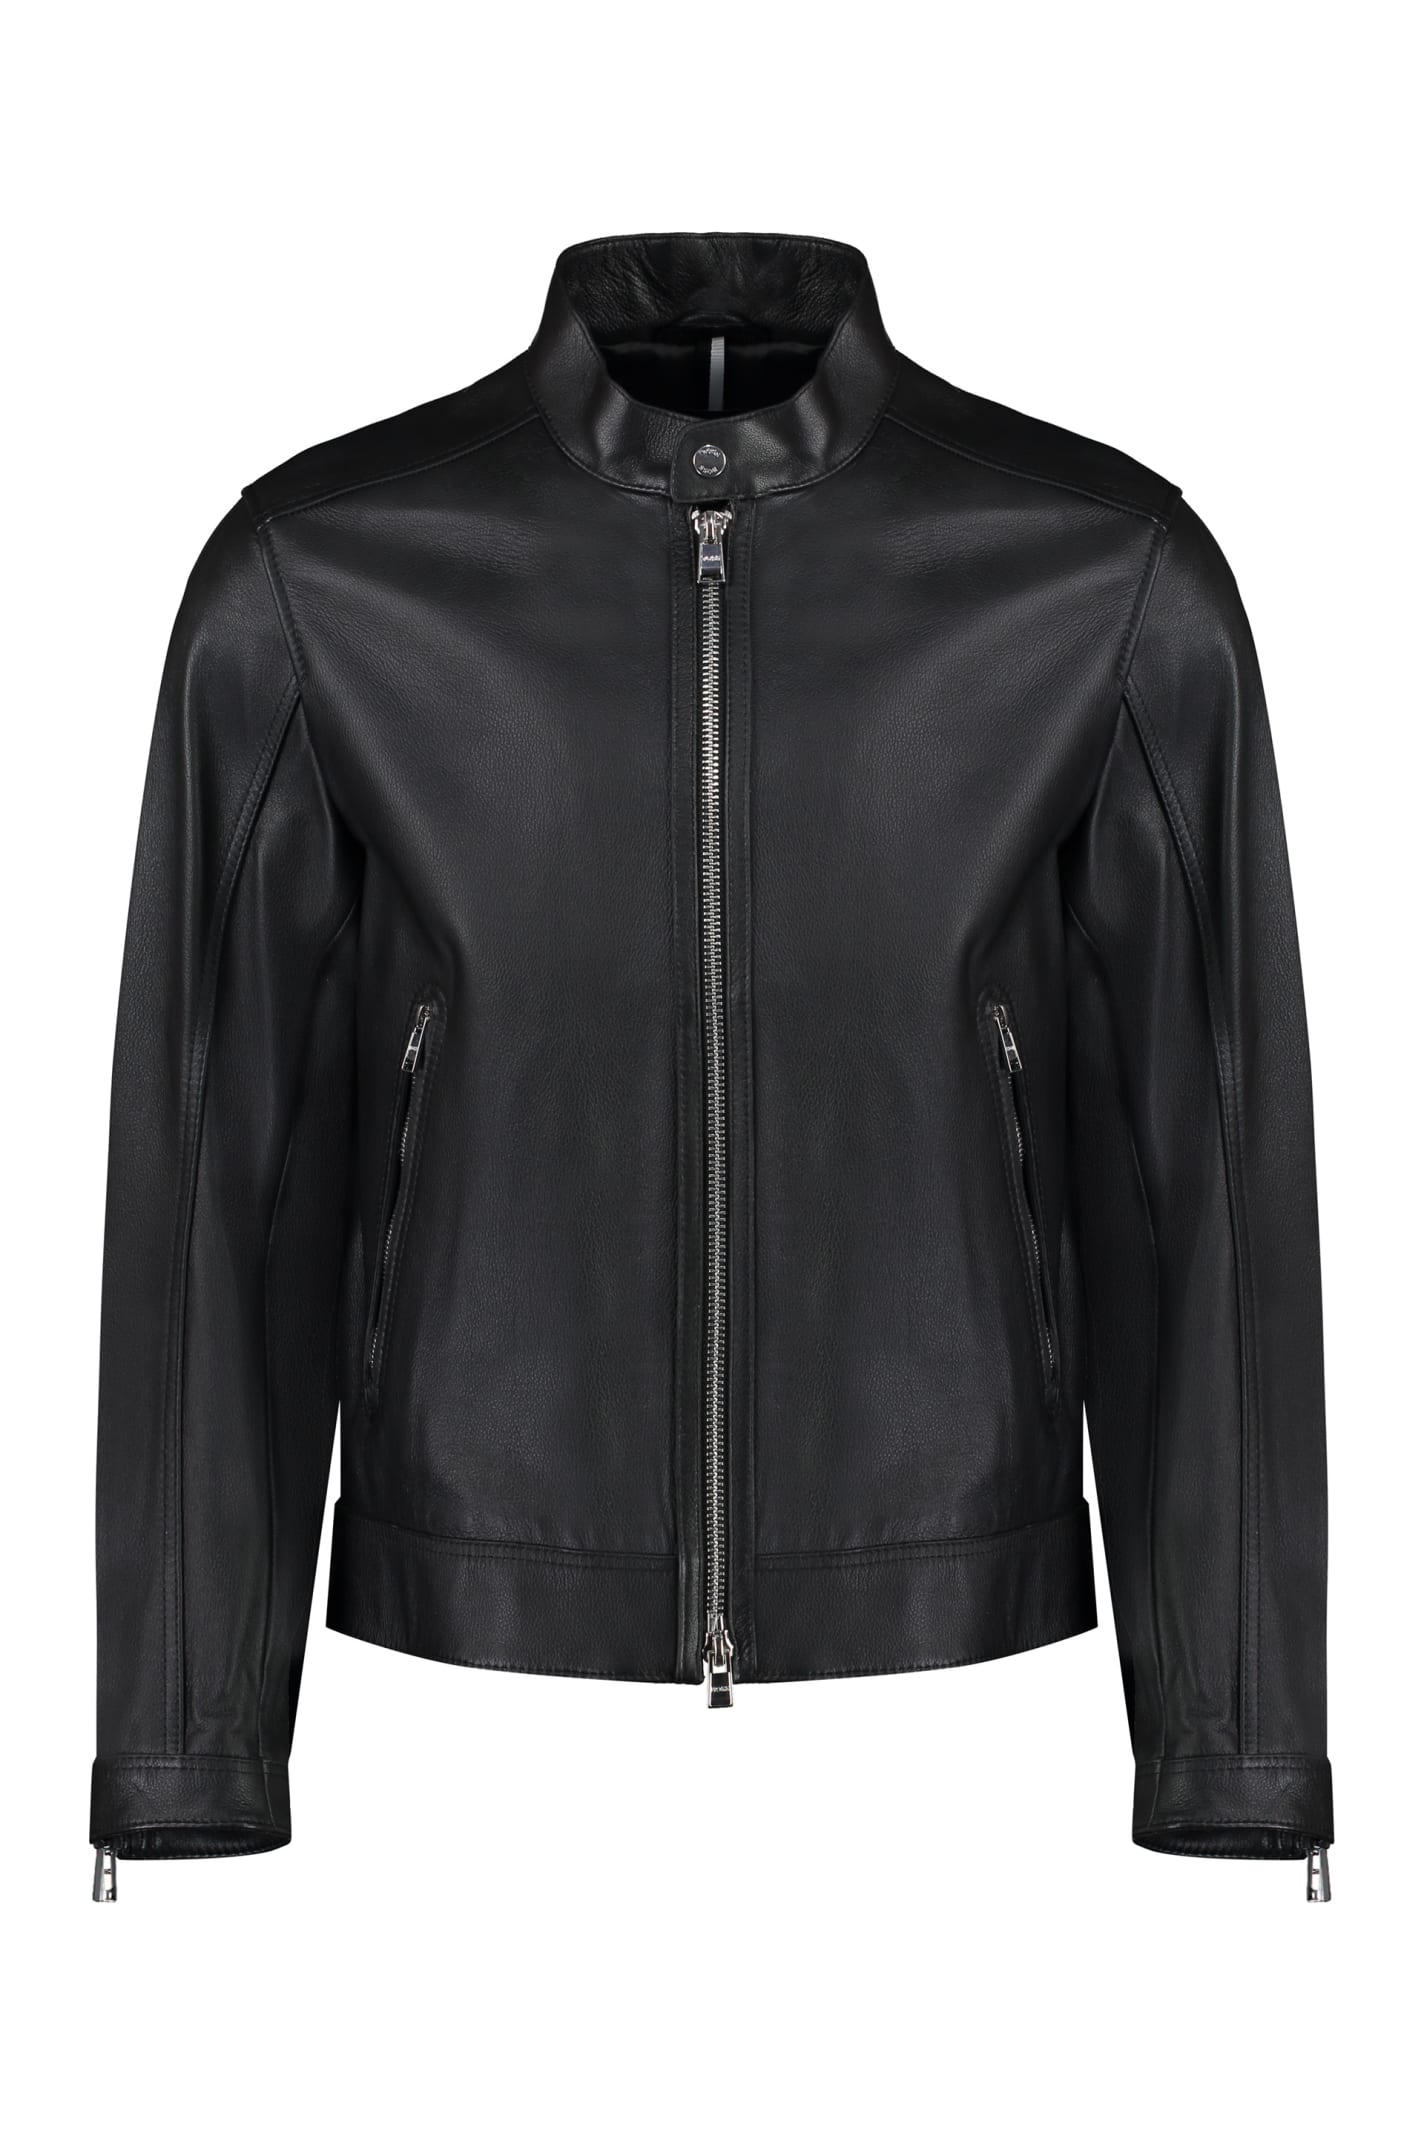 Genuine Authentic Men's Brown Hugo Boss Leather Jacket Size (50) Large |  eBay